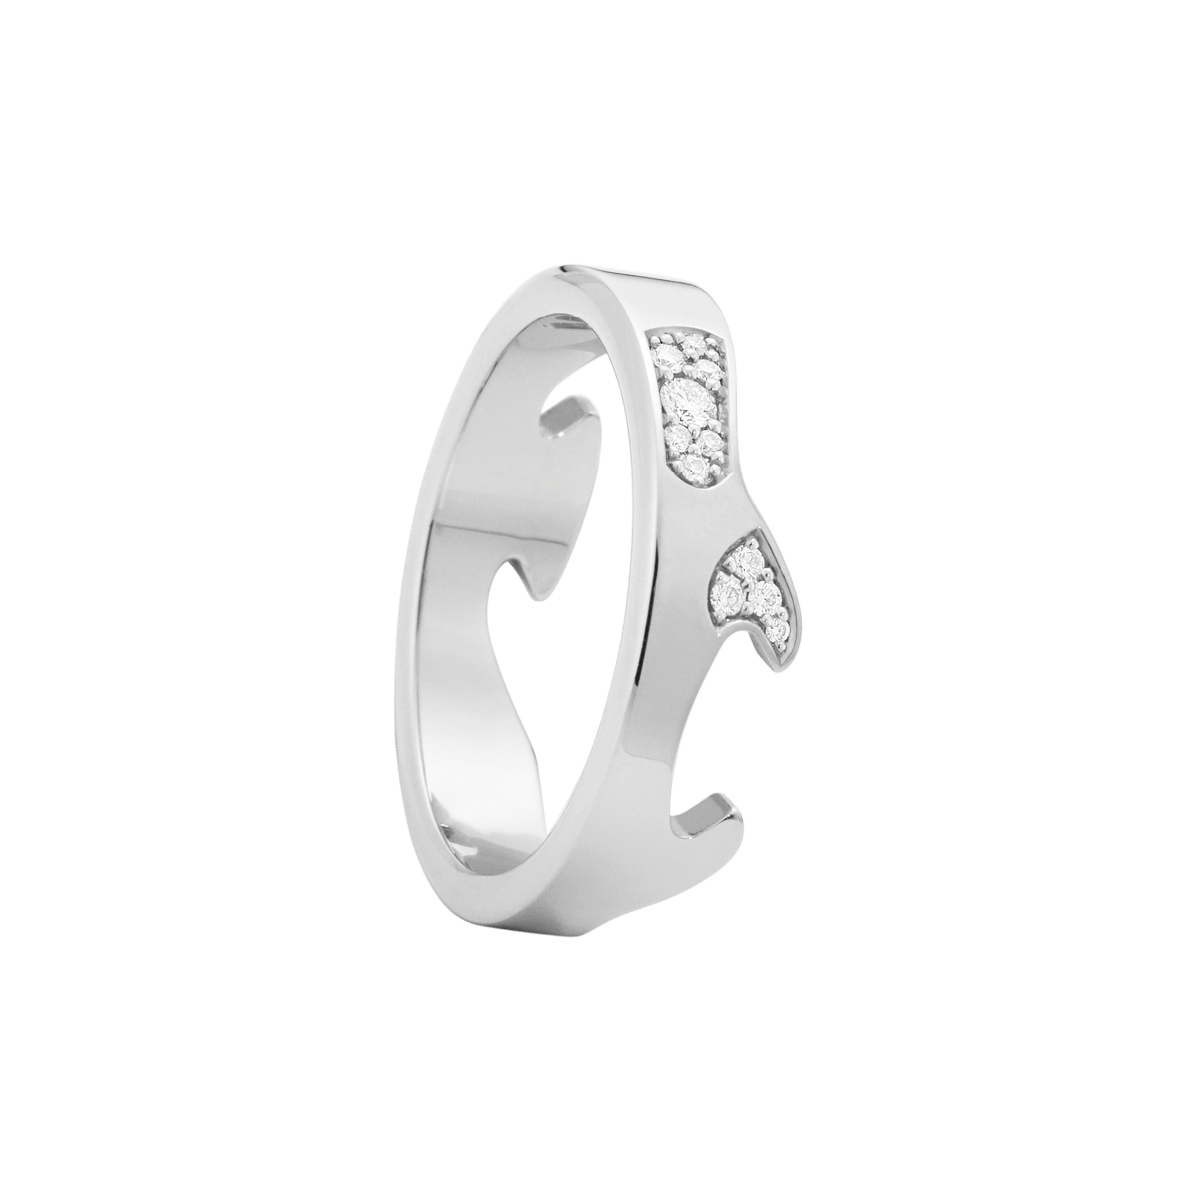 georg jensen fusion cloud diamond set ring in 18ct white gold 200010630056